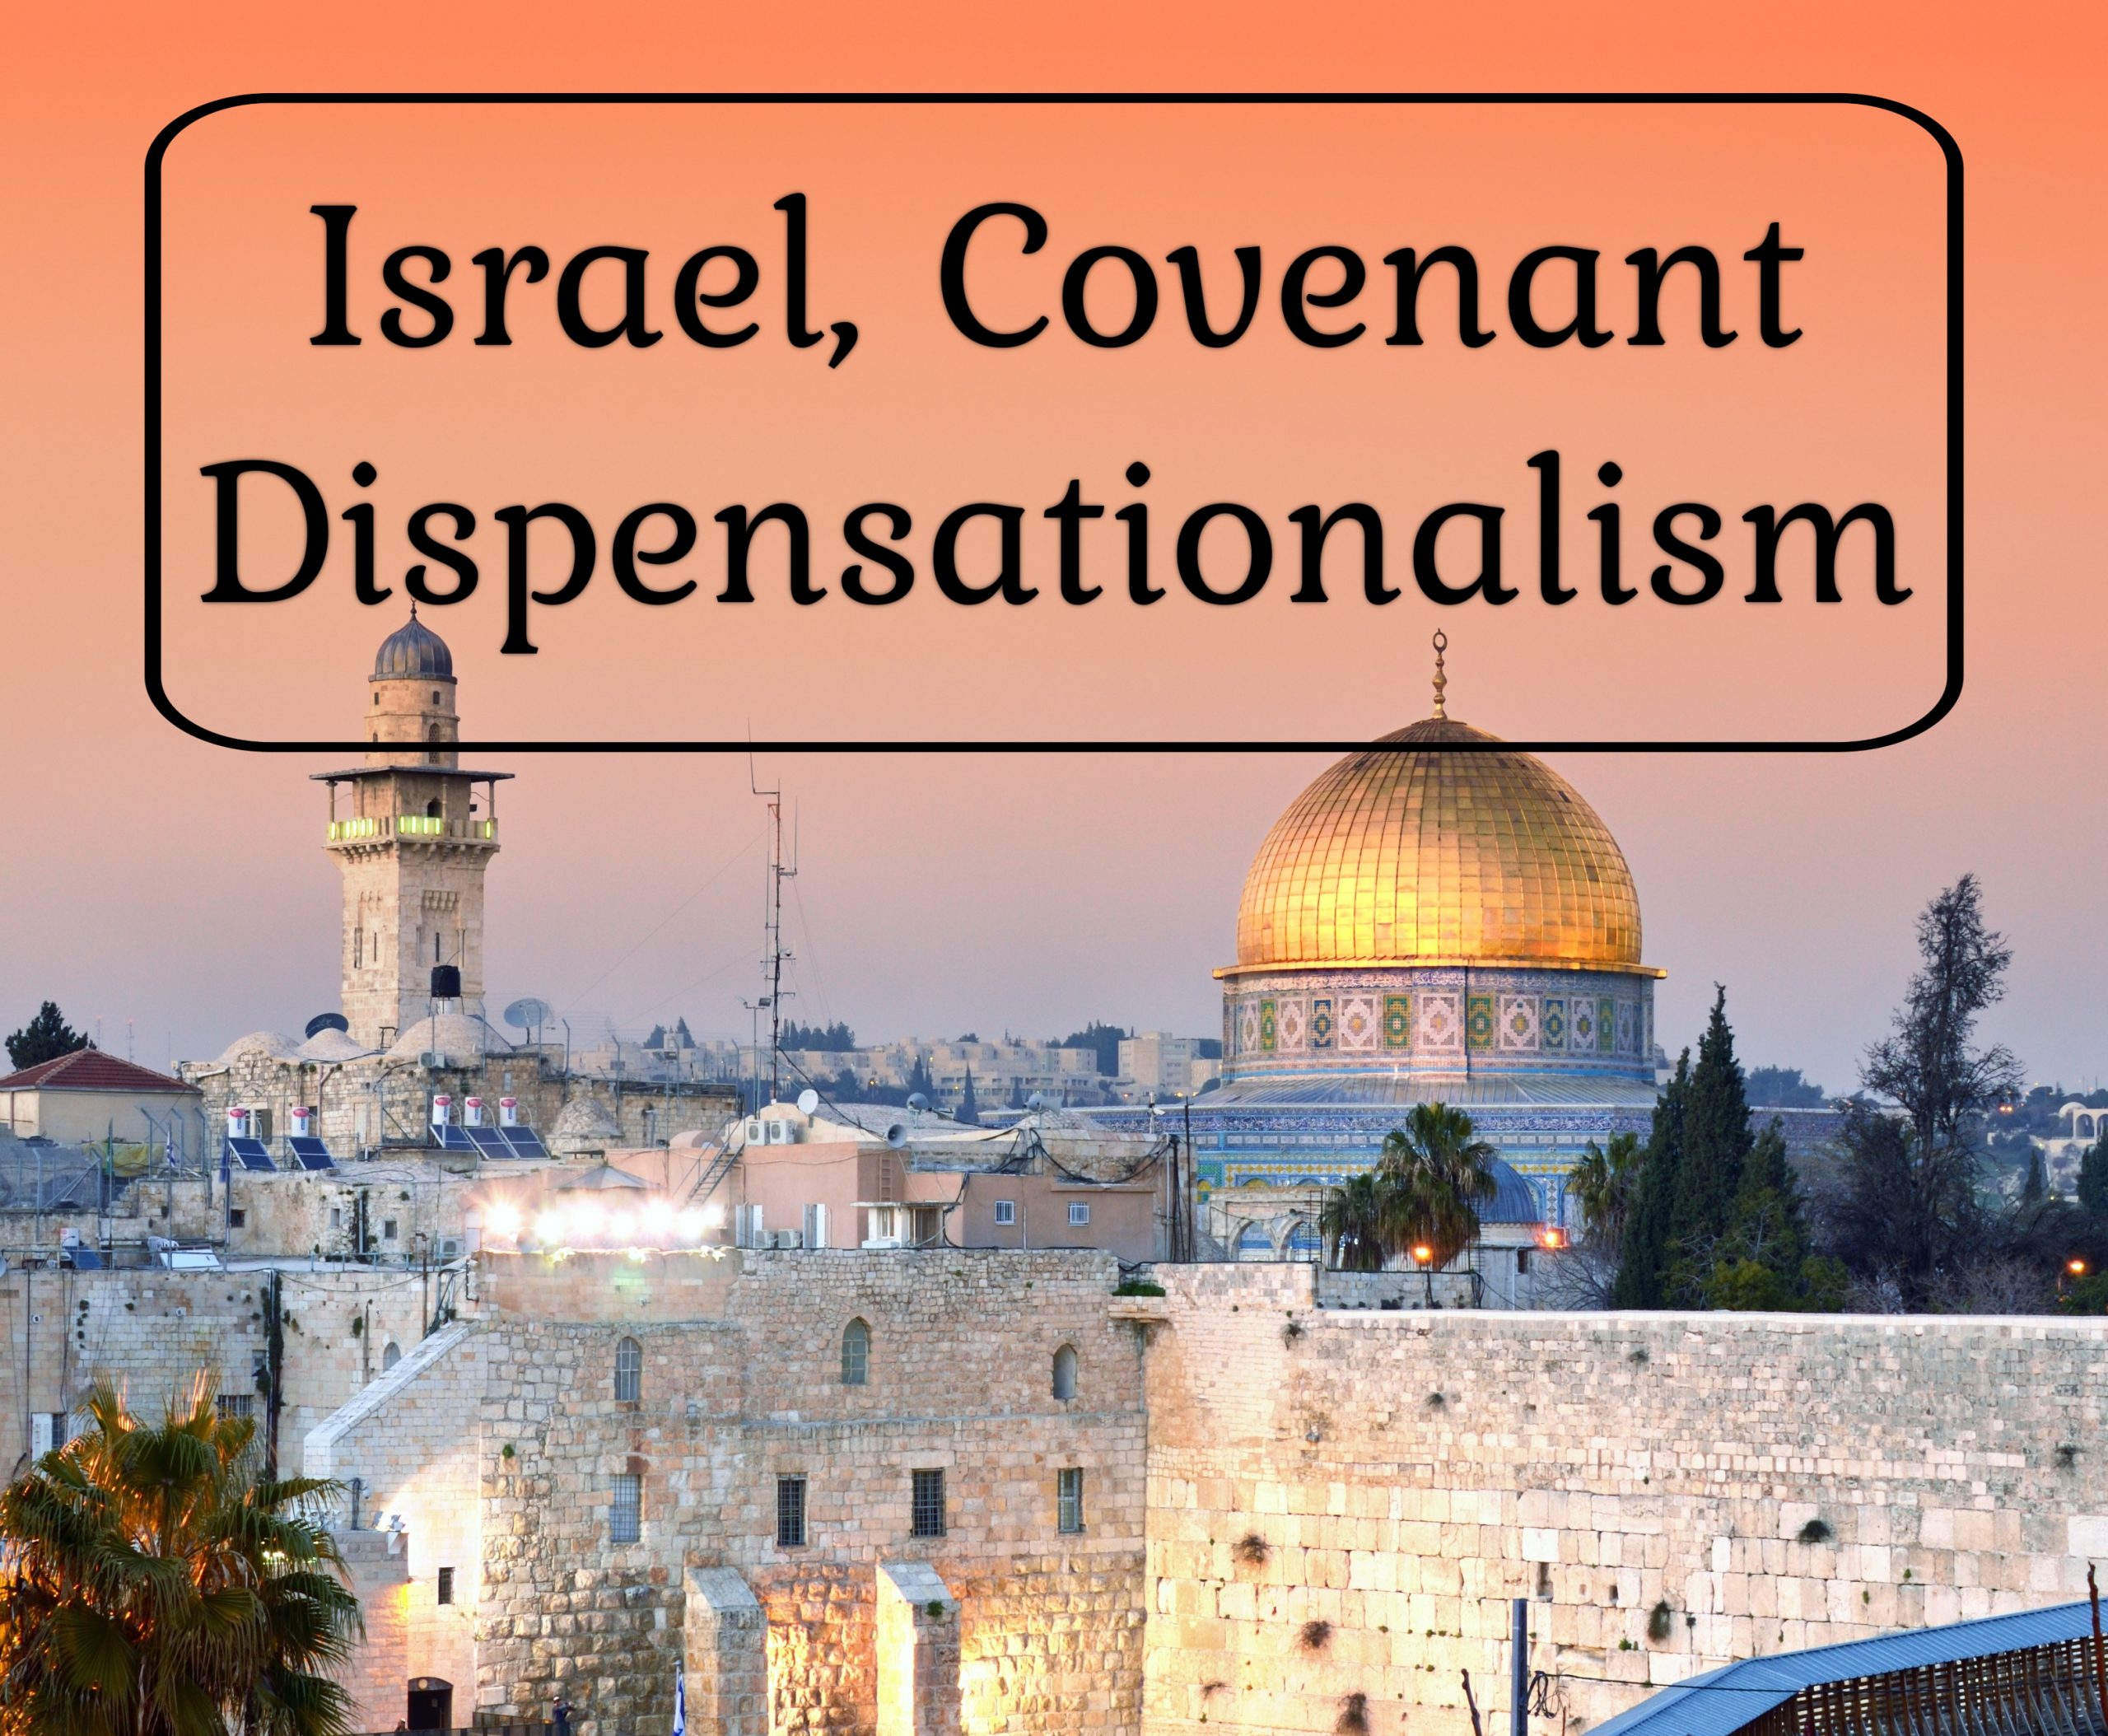 Israel, Covenant, Dispensationalism